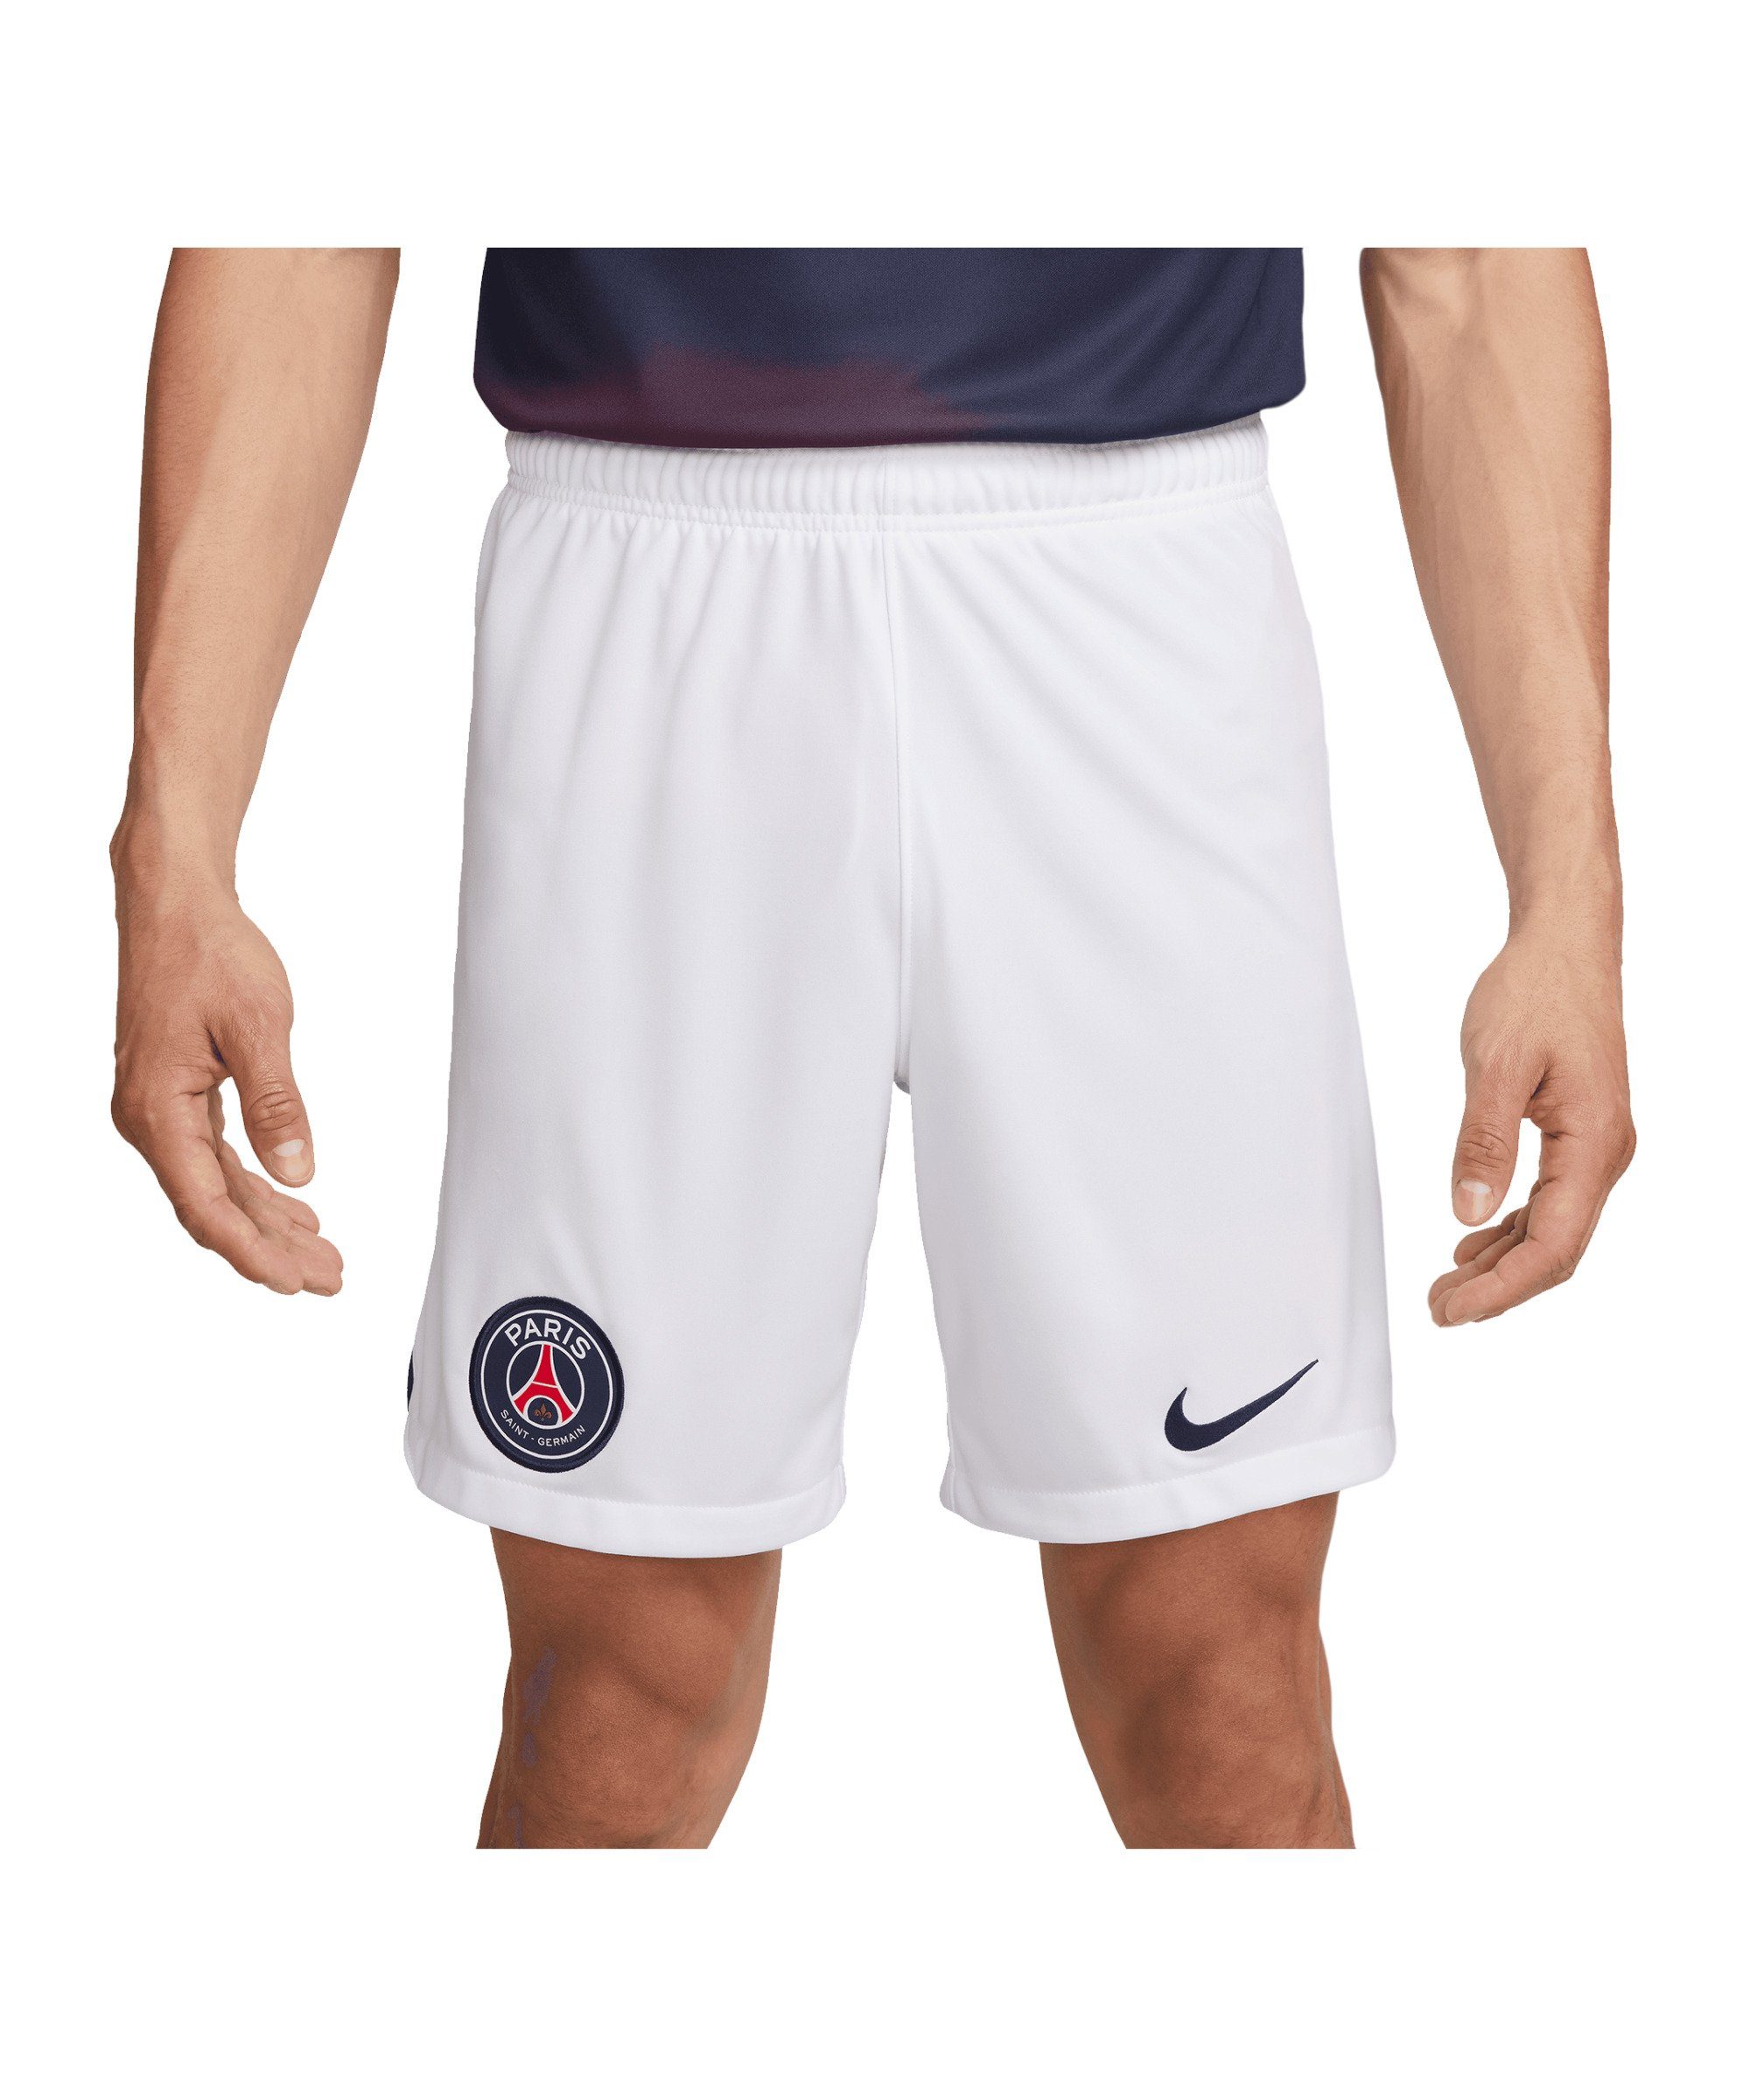 St. Nike weissblaublau Short Home Away 23/24 Paris Sporthose Germain